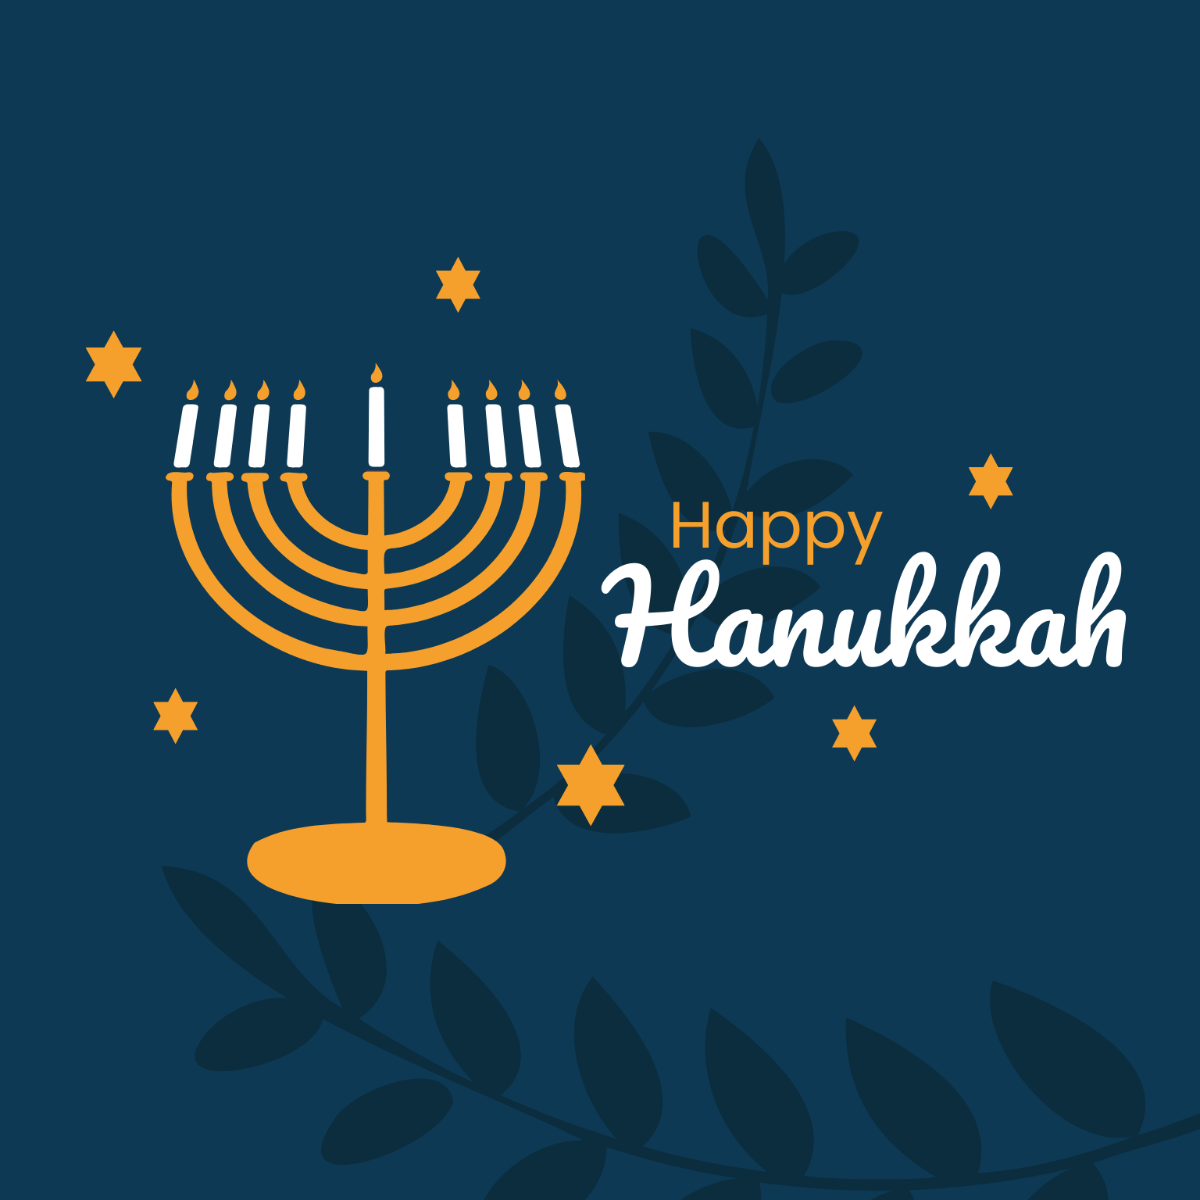 Free Happy Hanukkah Illustration Template